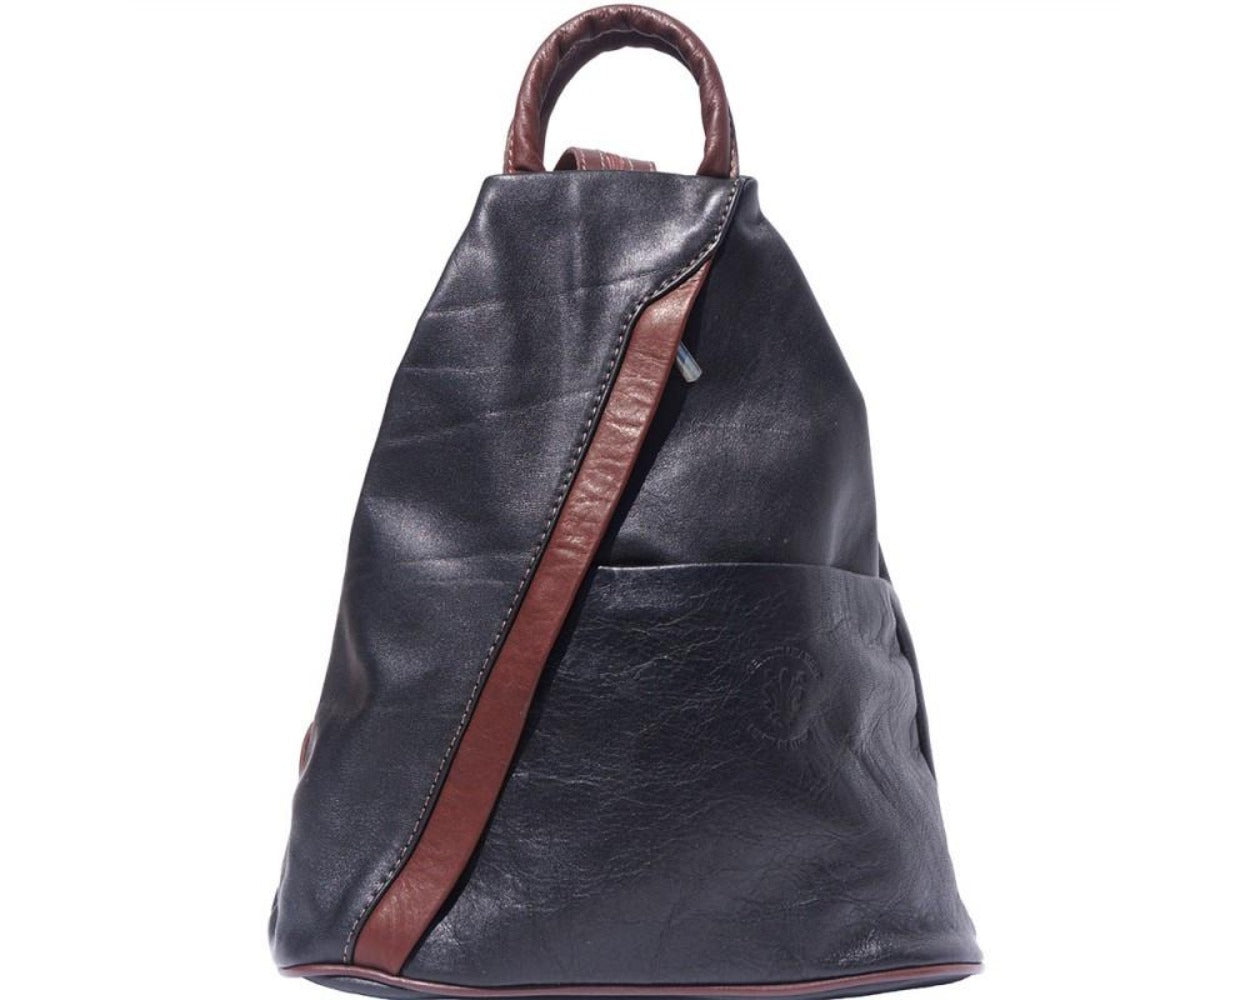 LaGaksta Submedium Leather Backpack Convertible Purse